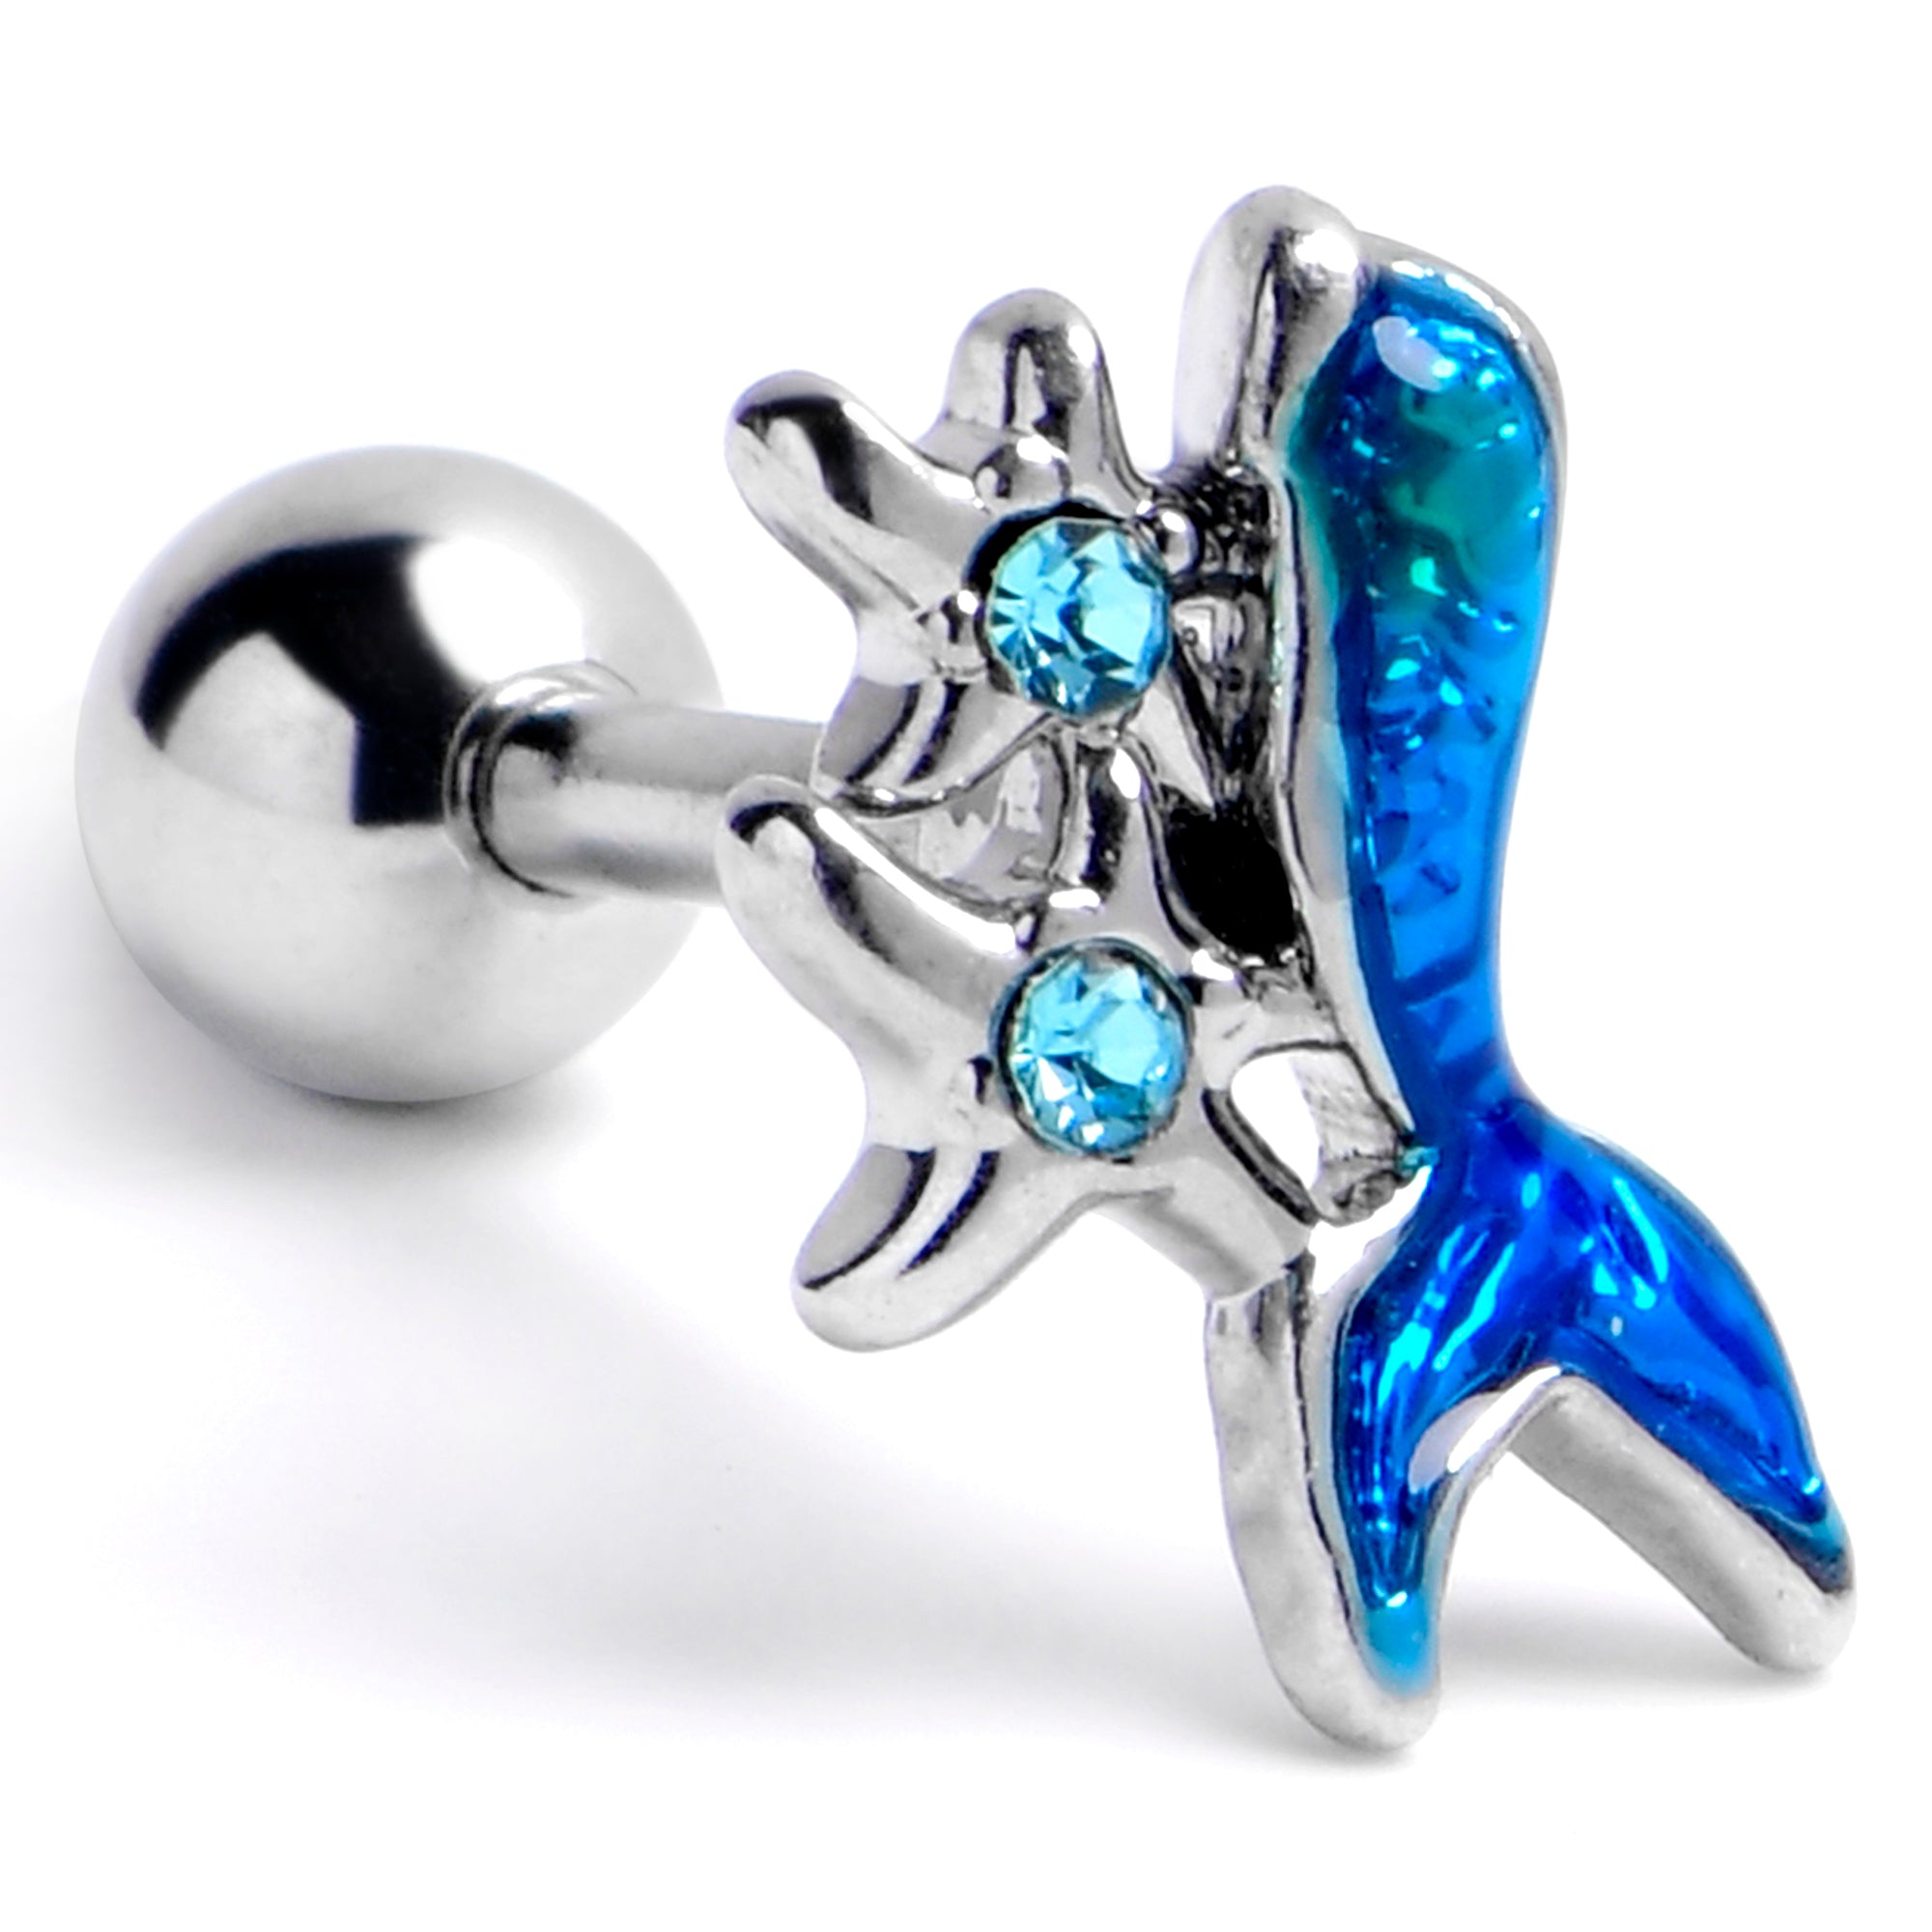 16 Gauge 1/4 Blue Gem Mermaid Tail Blue Stars Cartilage Tragus Earring